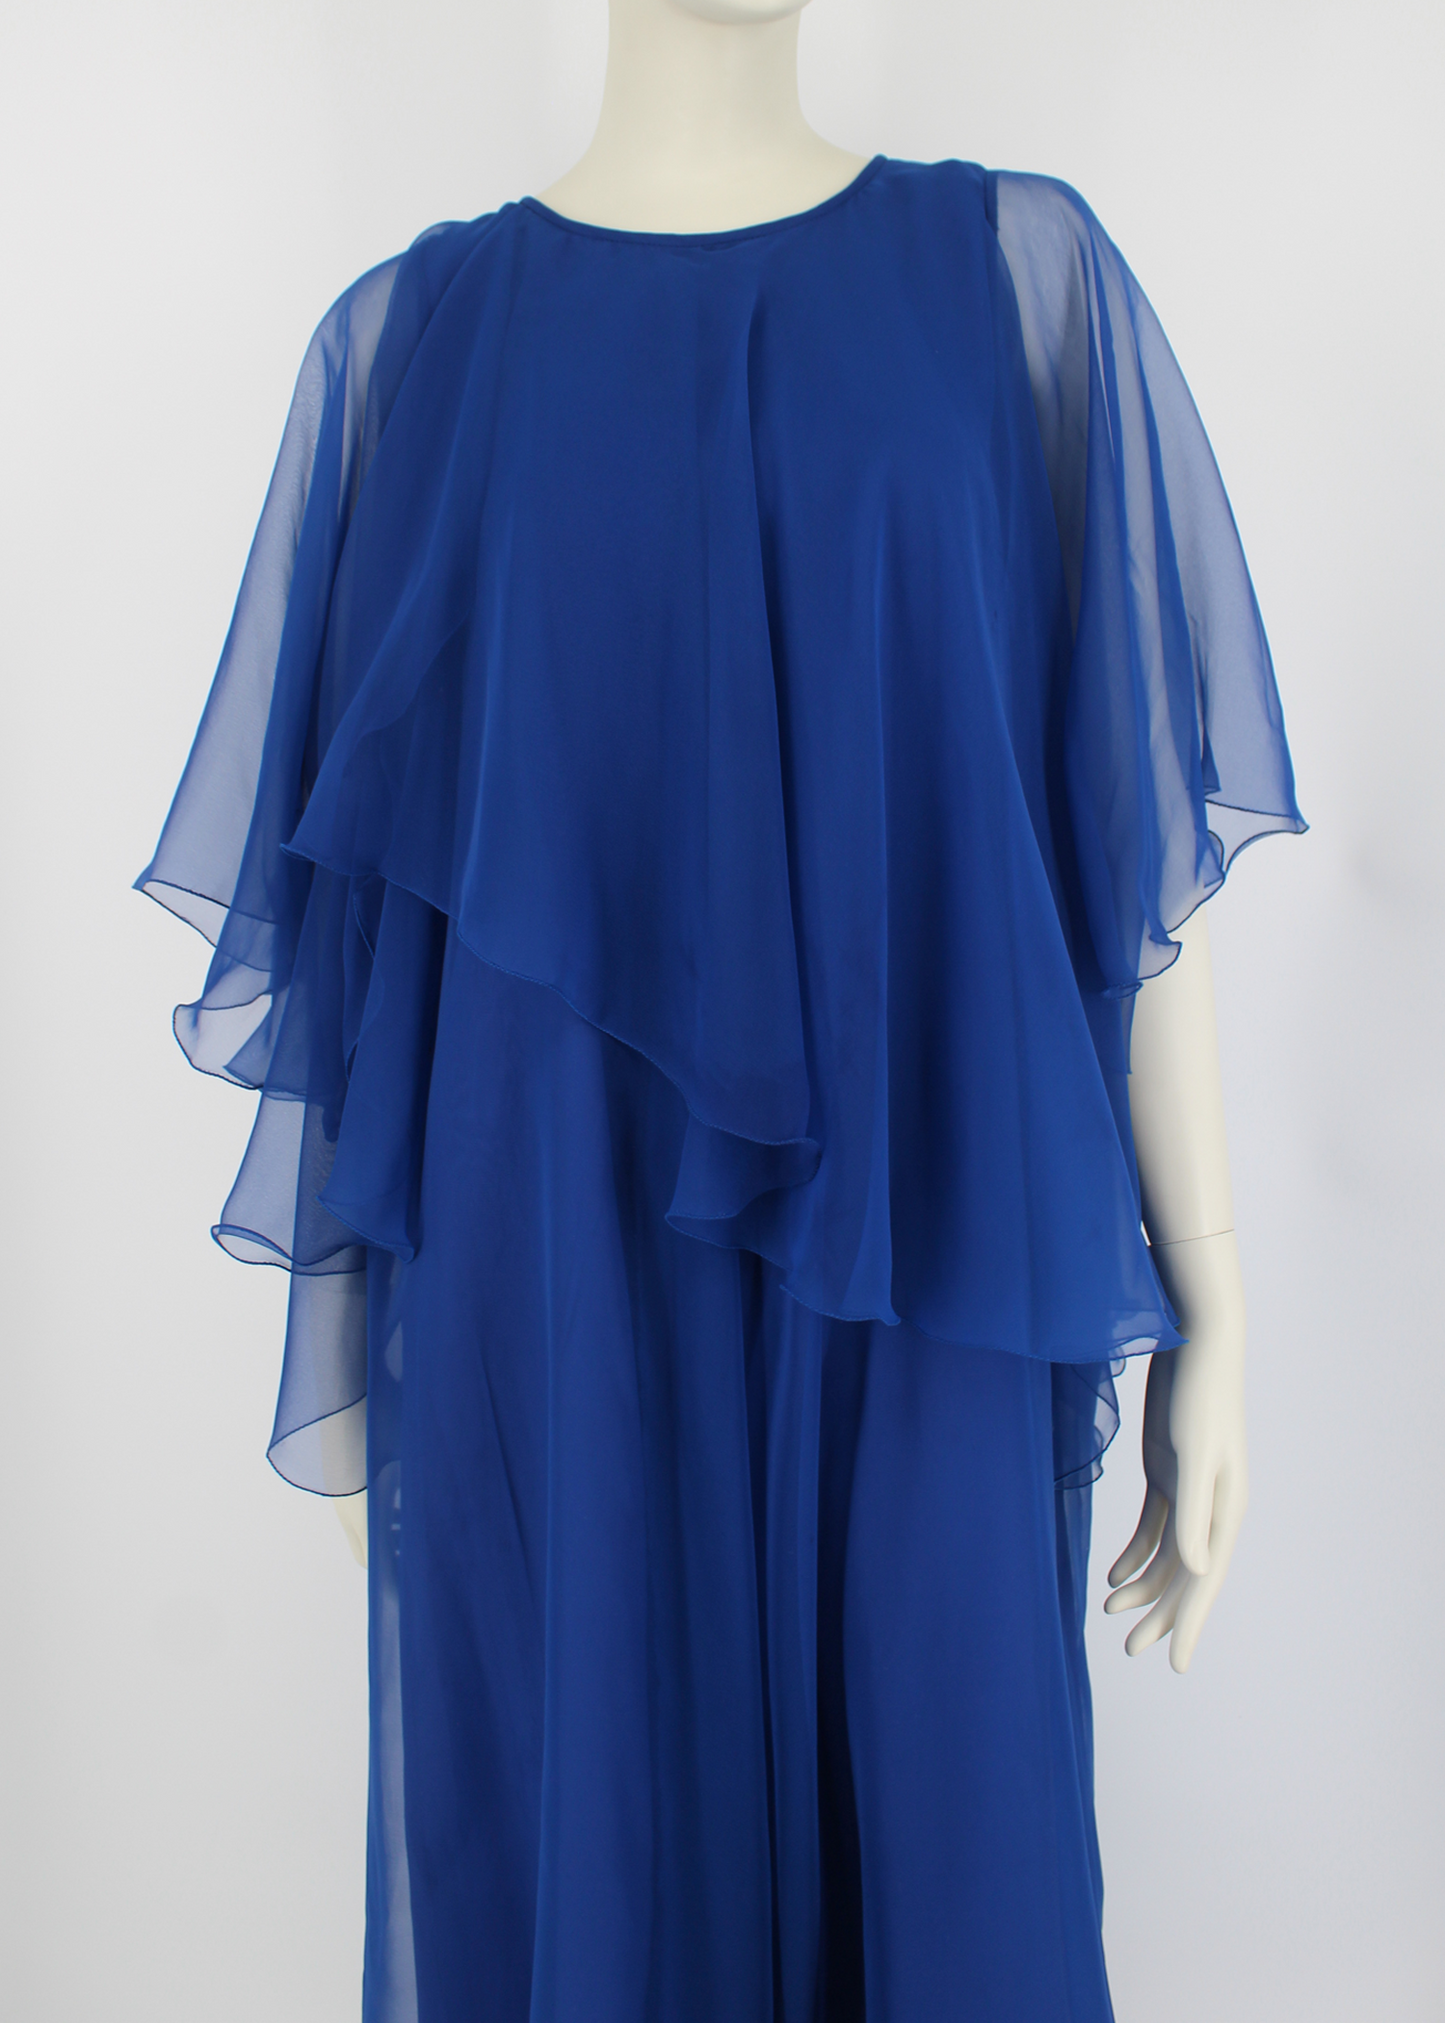 Jean Varon 1960s Sapphire Waterfall Maxi Dress